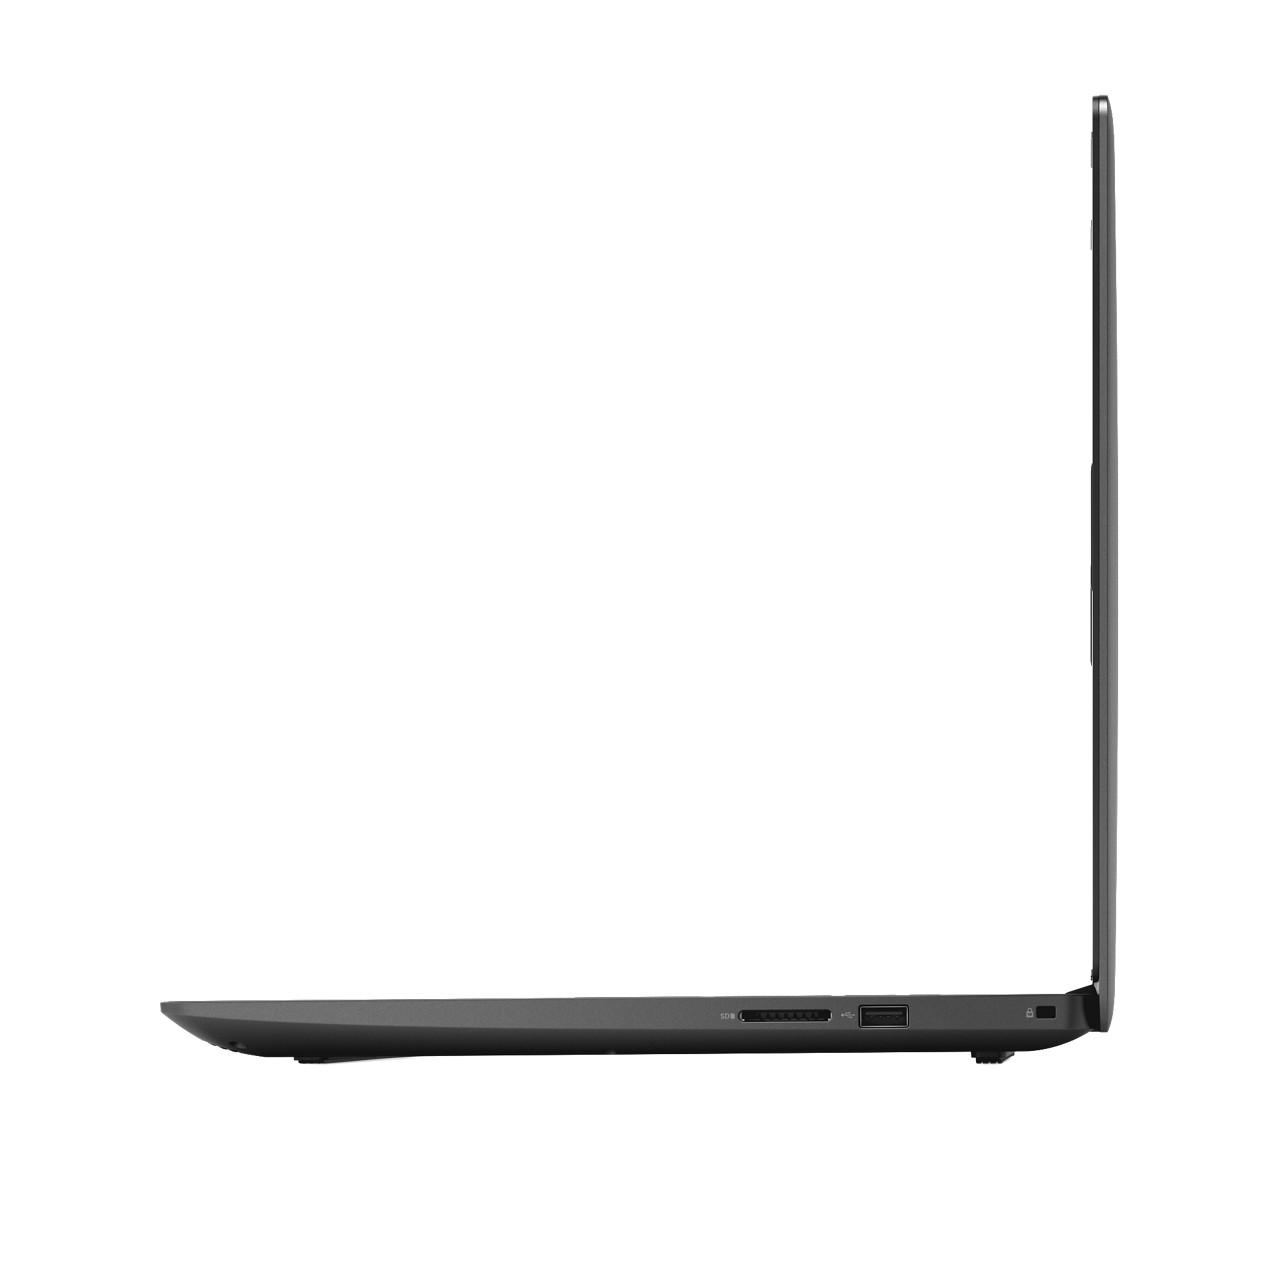 Dell G3 Gaming Laptop 15.6" Full HD, Intel Core i5-8300H, NVIDIA GeForce GTX 1050 4GB, 1TB HDD + 16GB Intel Optane Storage, 8GB RAM, Windows 10 - Black - G3579-5245BLK - image 3 of 6